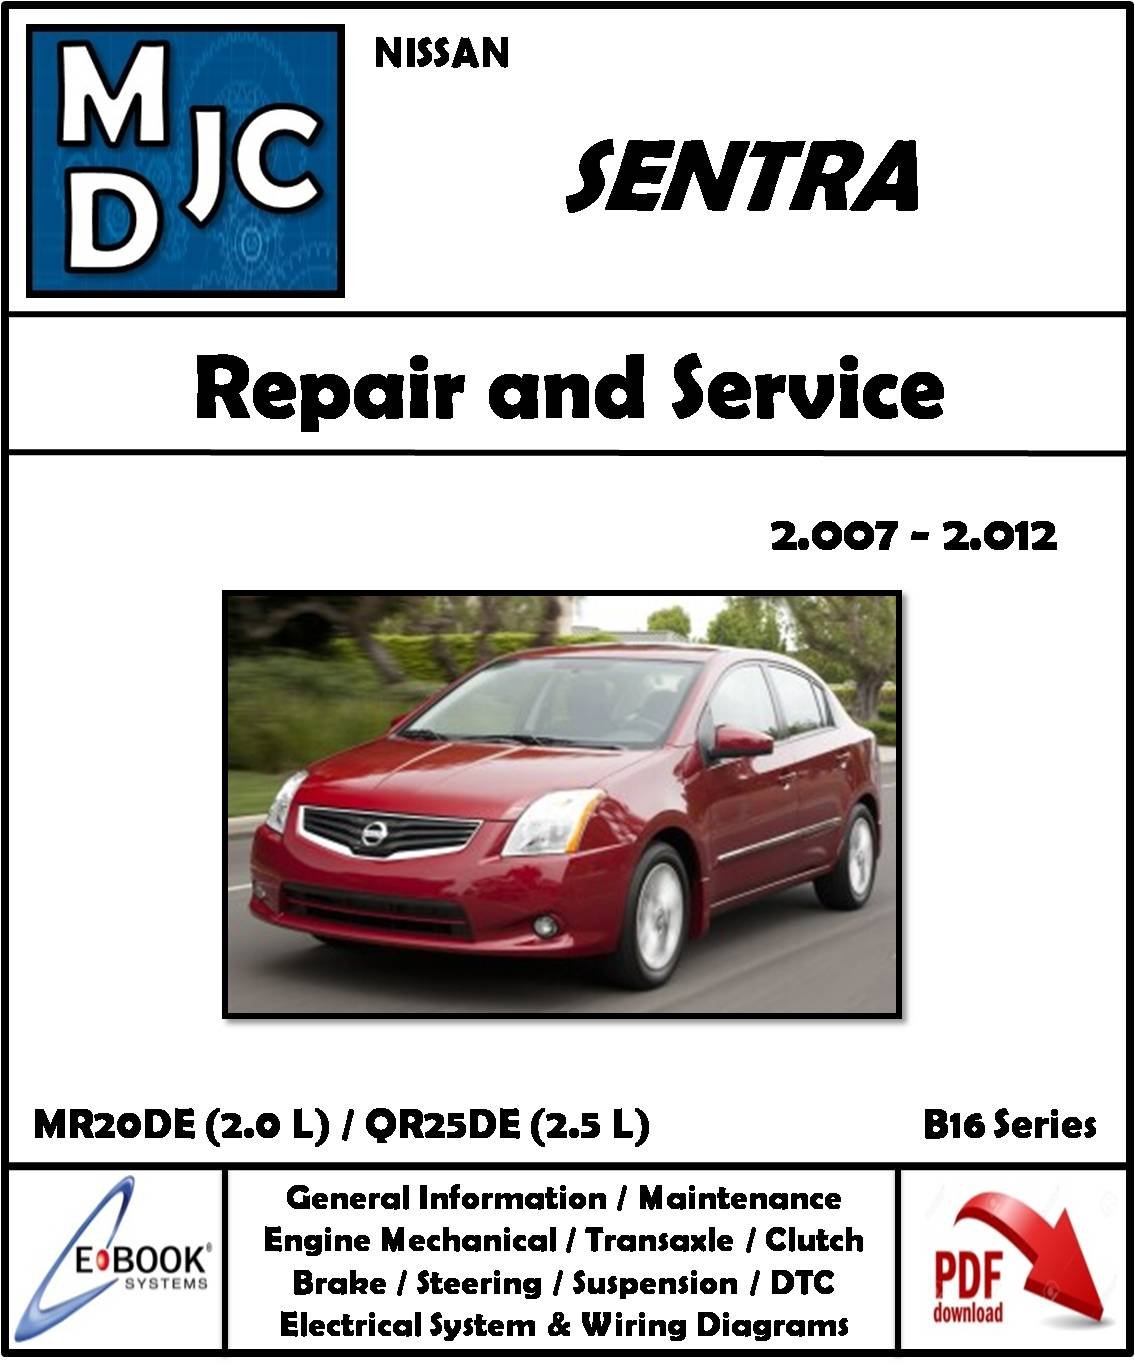 Nissan Sentra (B16 Serie) 2007 - 2012